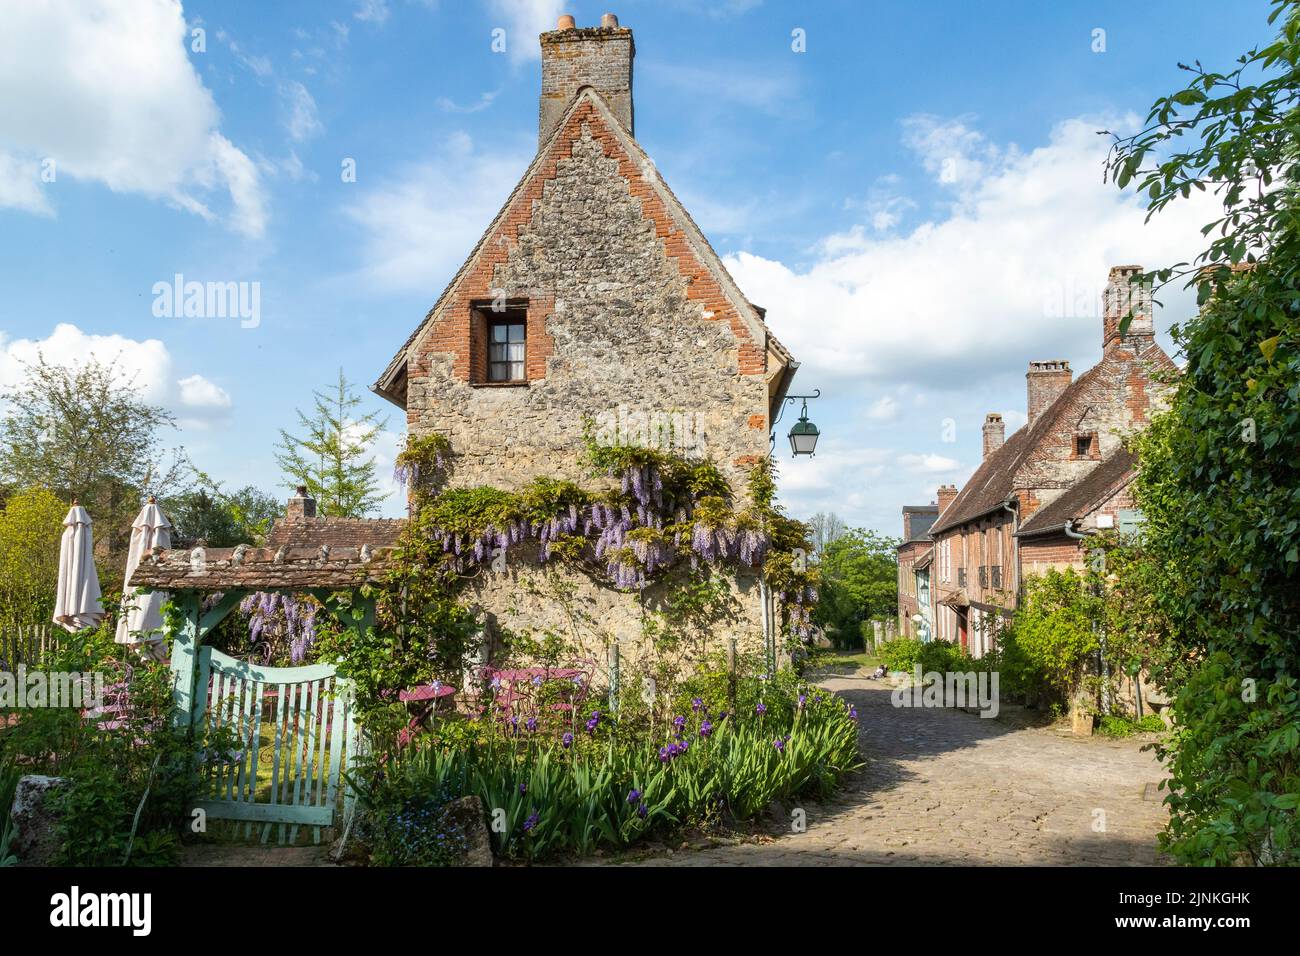 France, Oise, Picardie, Pays de Bray, Gerberoy, labelled Les Plus Beaux Villages de France (The Most Beautiful Villages of France), flowery street // Stock Photo